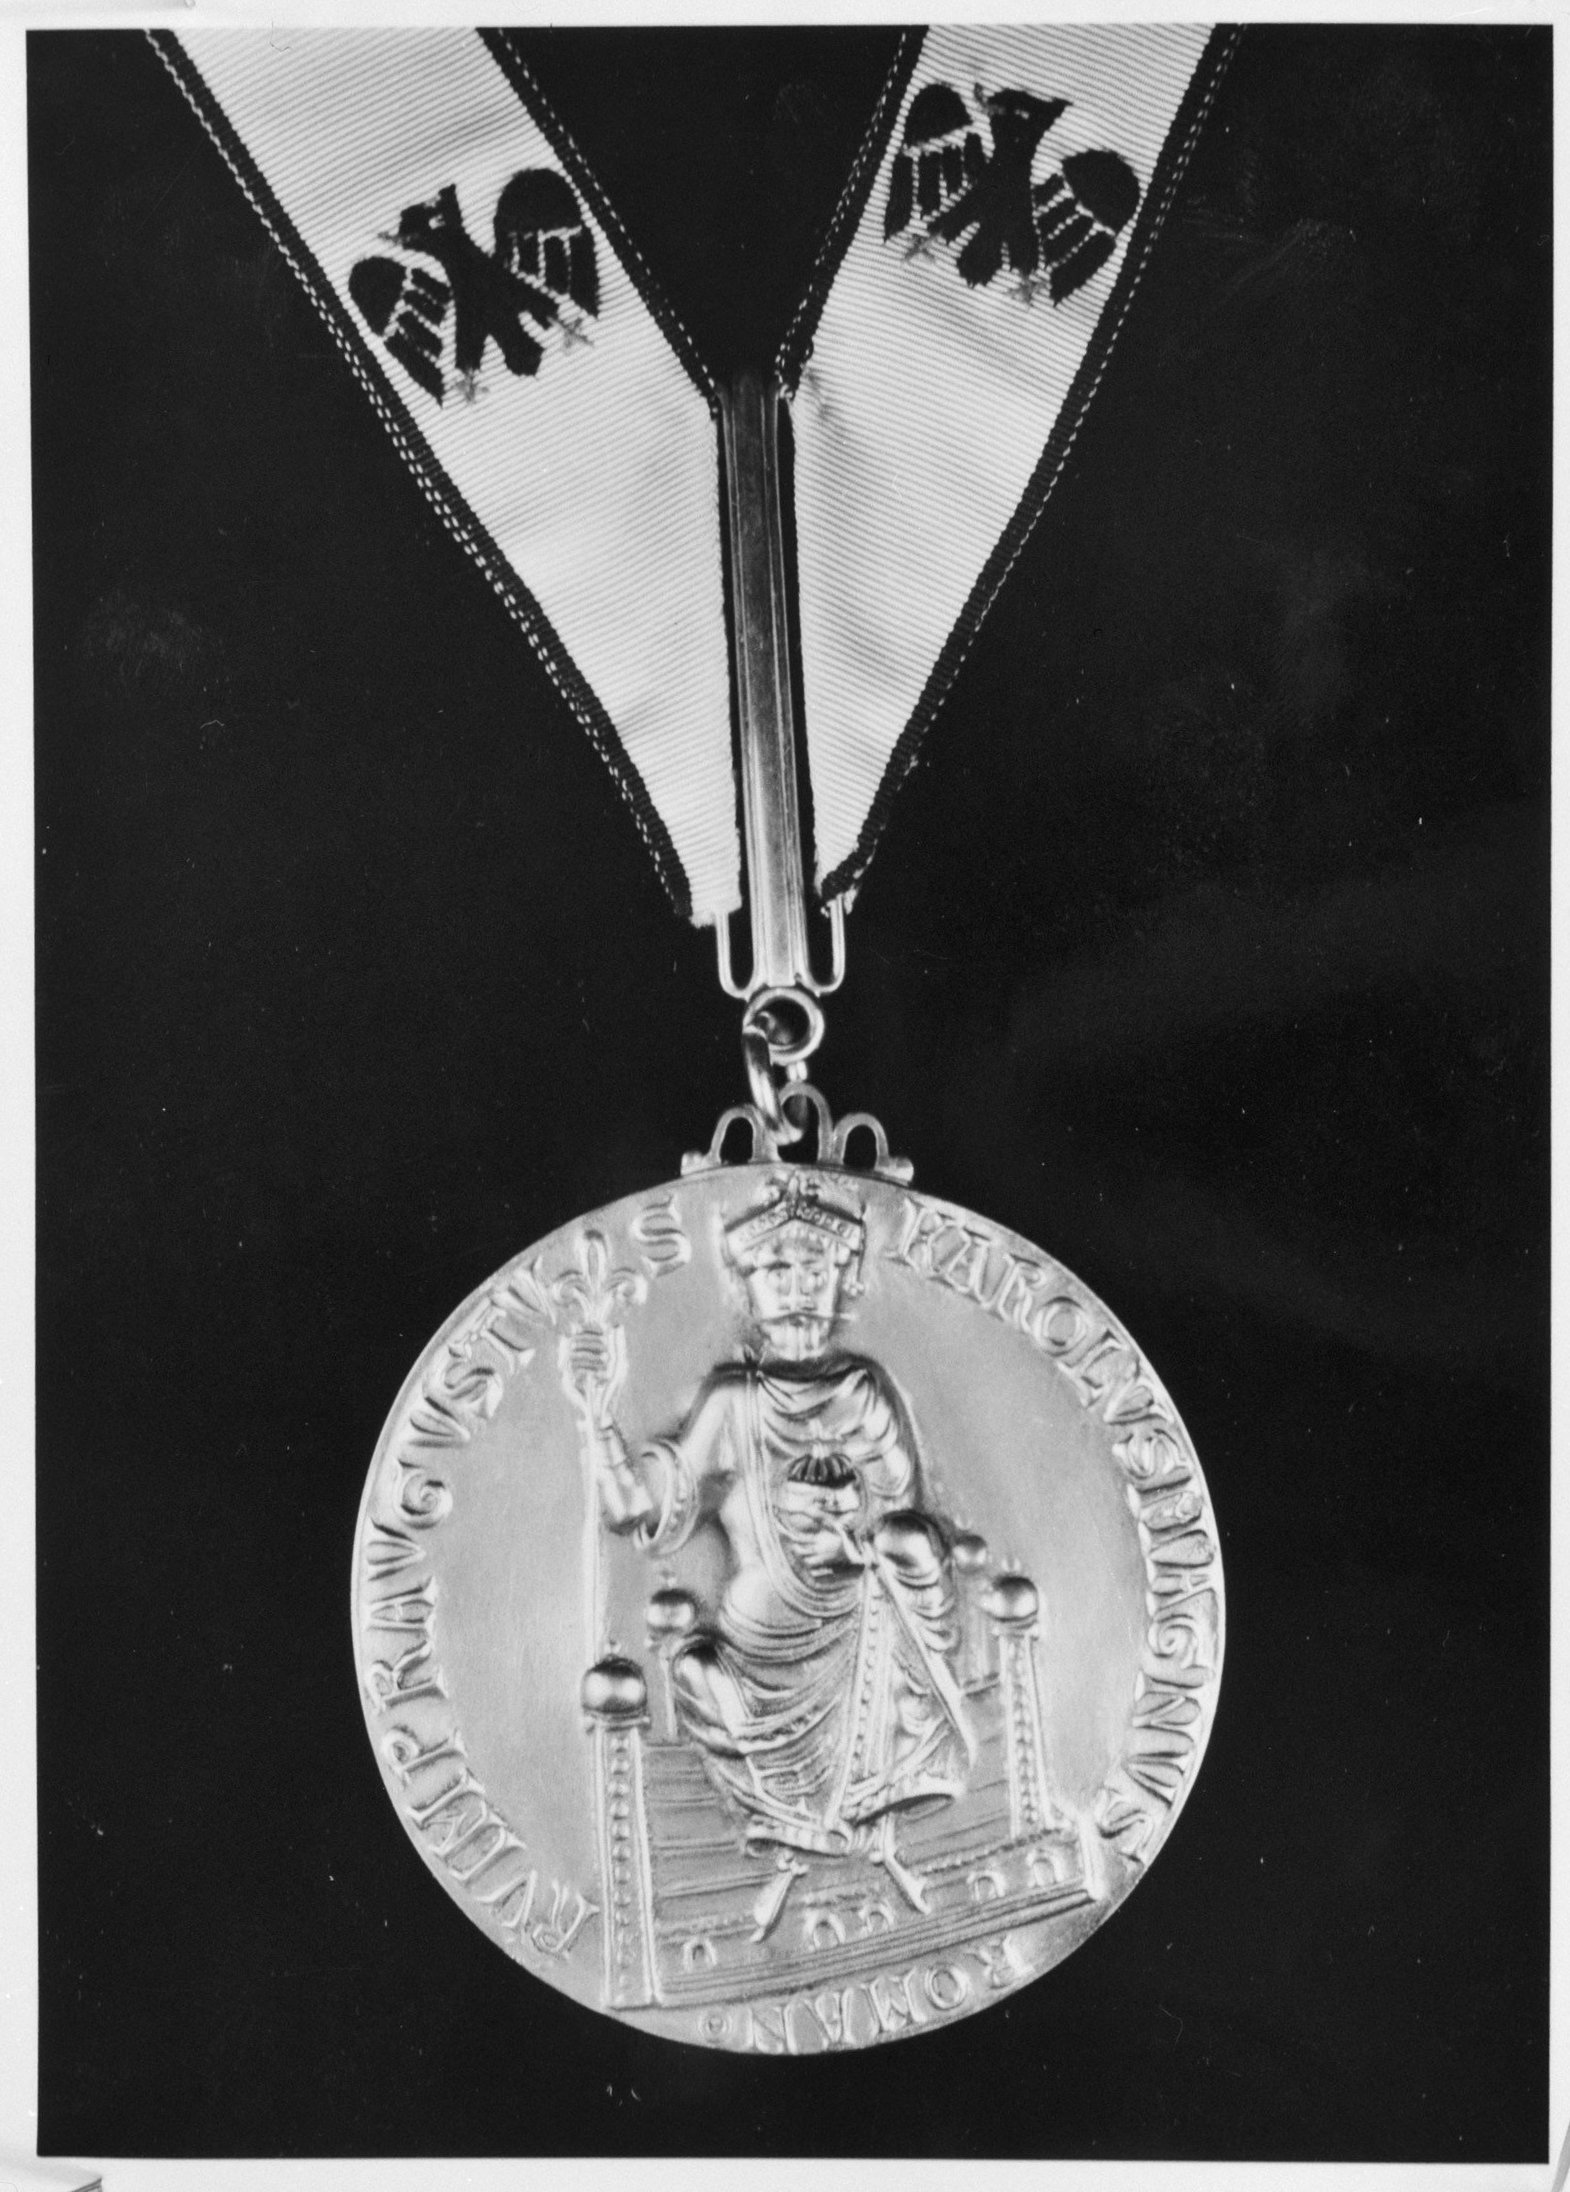 Gepensioneerd feedback Mier File:Karel de Grote prijs voor Minister Luns , de medaille, Bestanddeelnr  920-2550.jpg - Wikimedia Commons